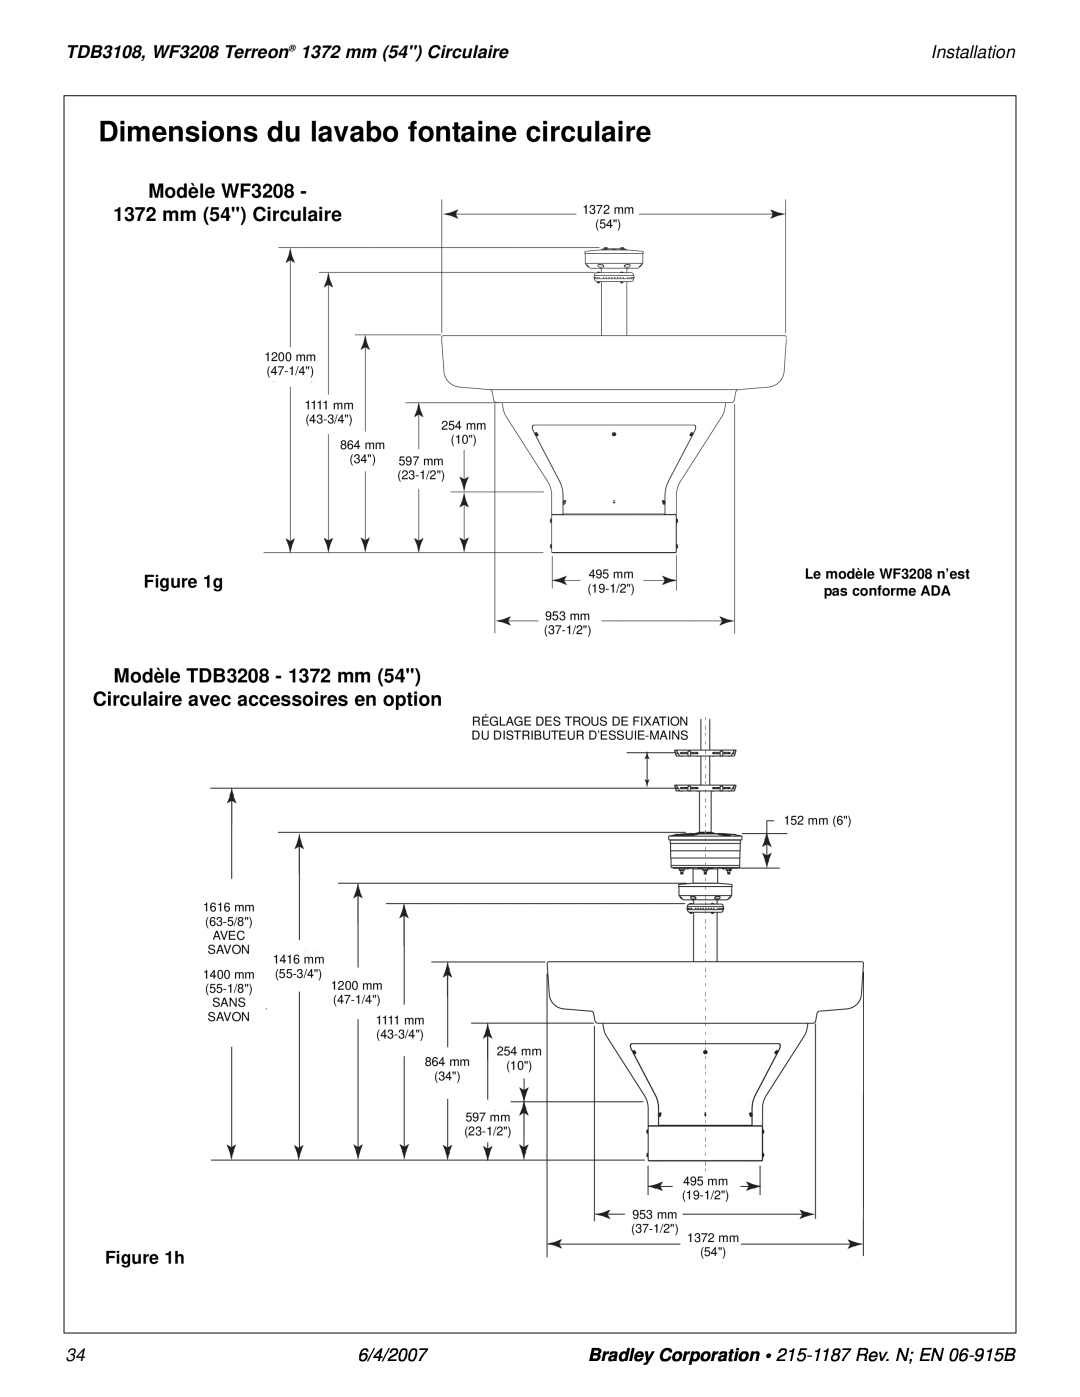 Bradley Smoker TDB3108 Dimensions du lavabo fontaine circulaire, Modèle WF3208, 1372 mm 54 Circulaire, Installation, g 